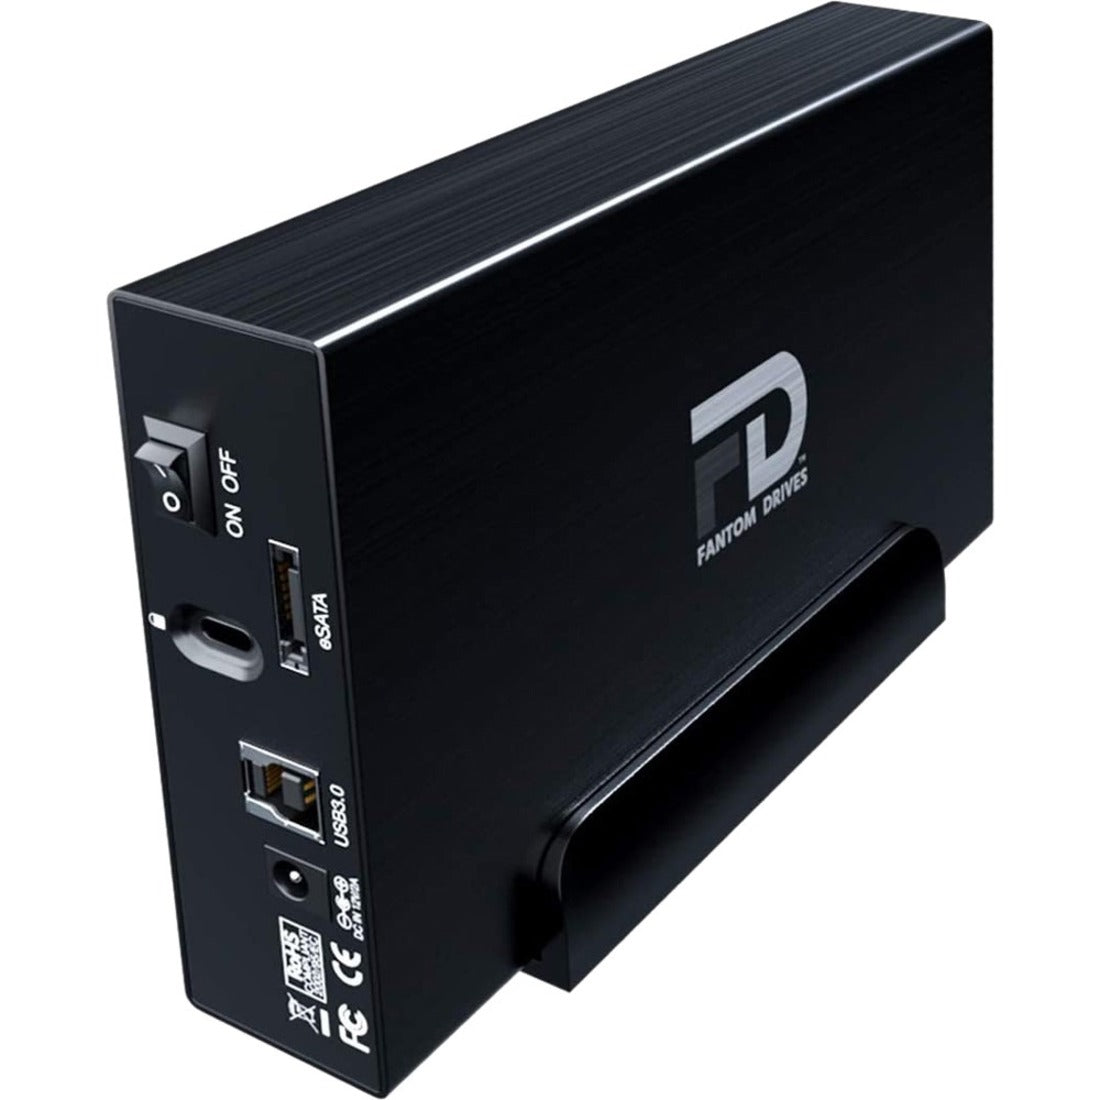 Fantom Drives 8TB External Hard Drive - GFORCE 3 - USB 3 eSATA Aluminum Black GF3B8000EU